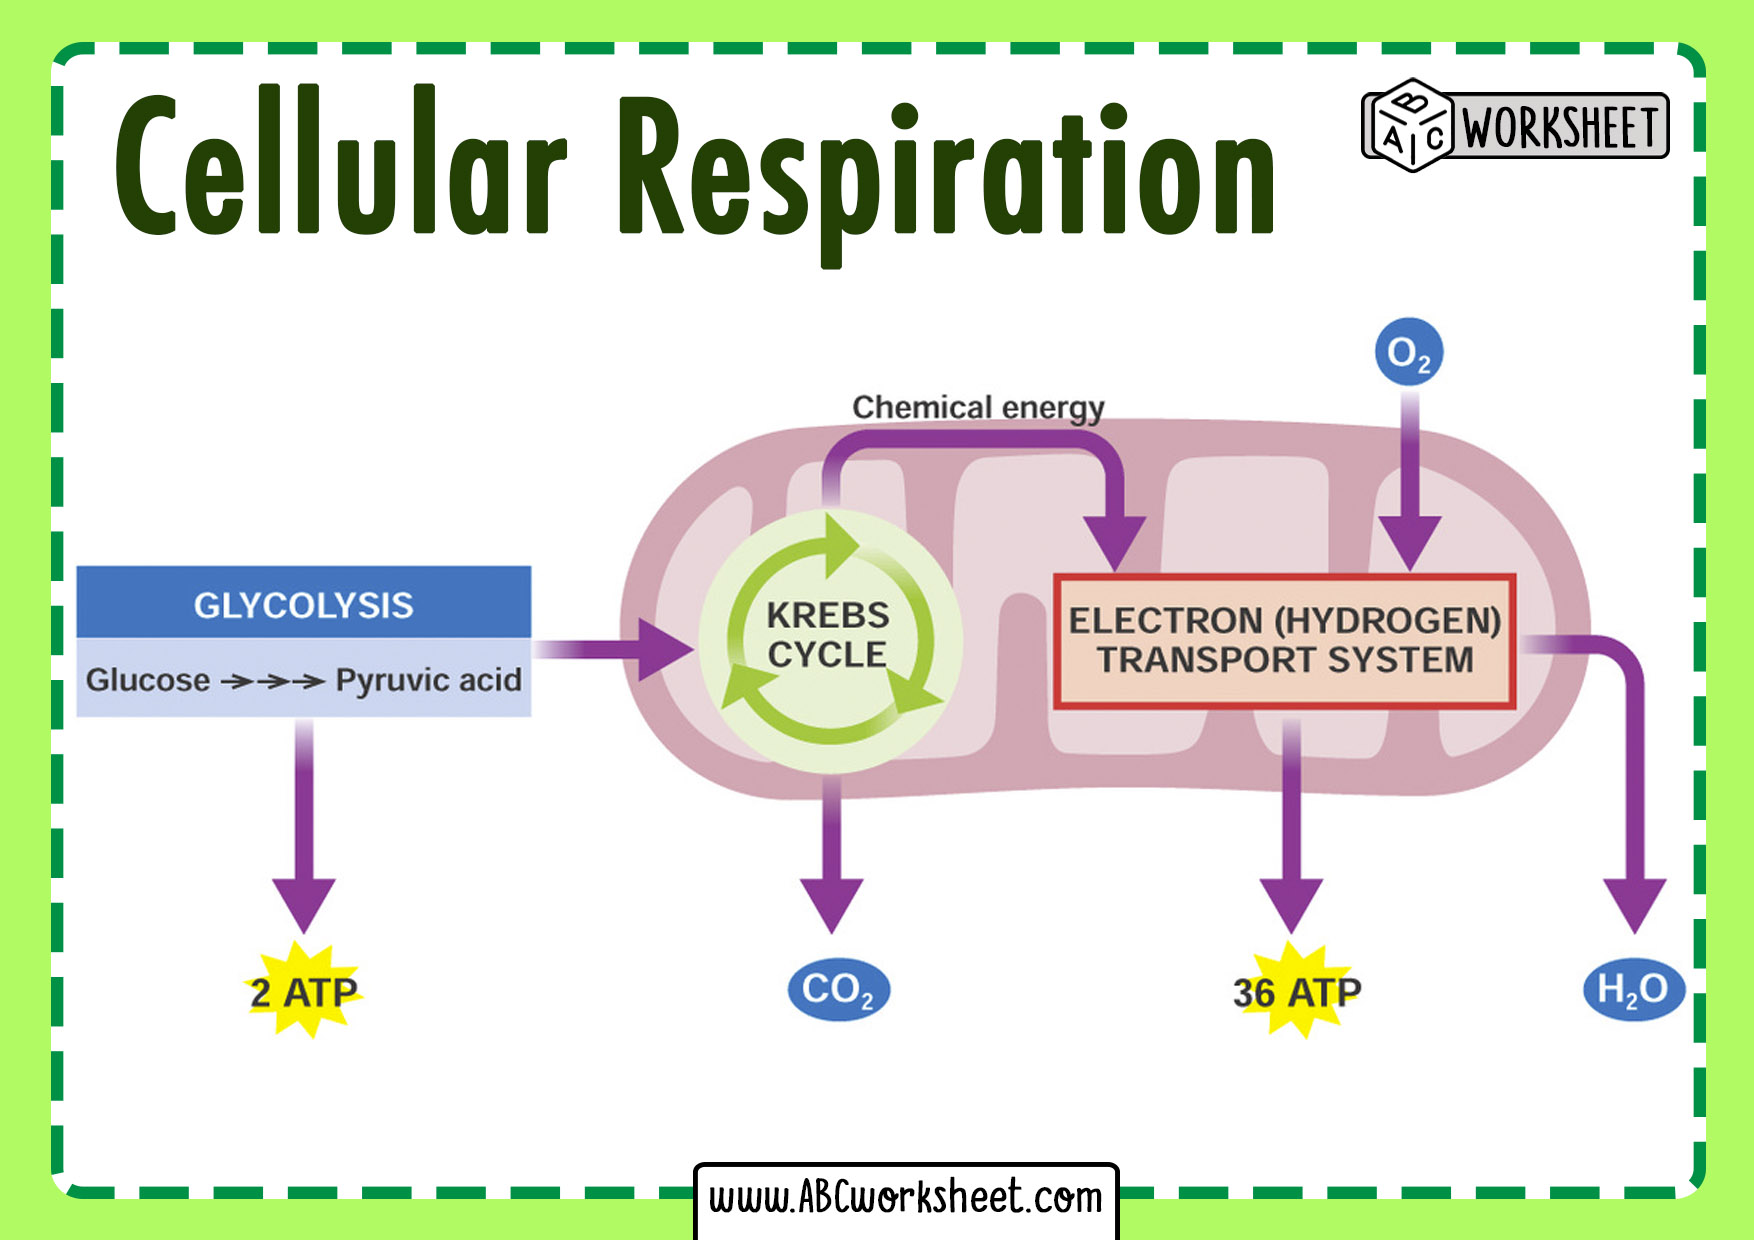 Cellular Respiration Summary - ABC Worksheet